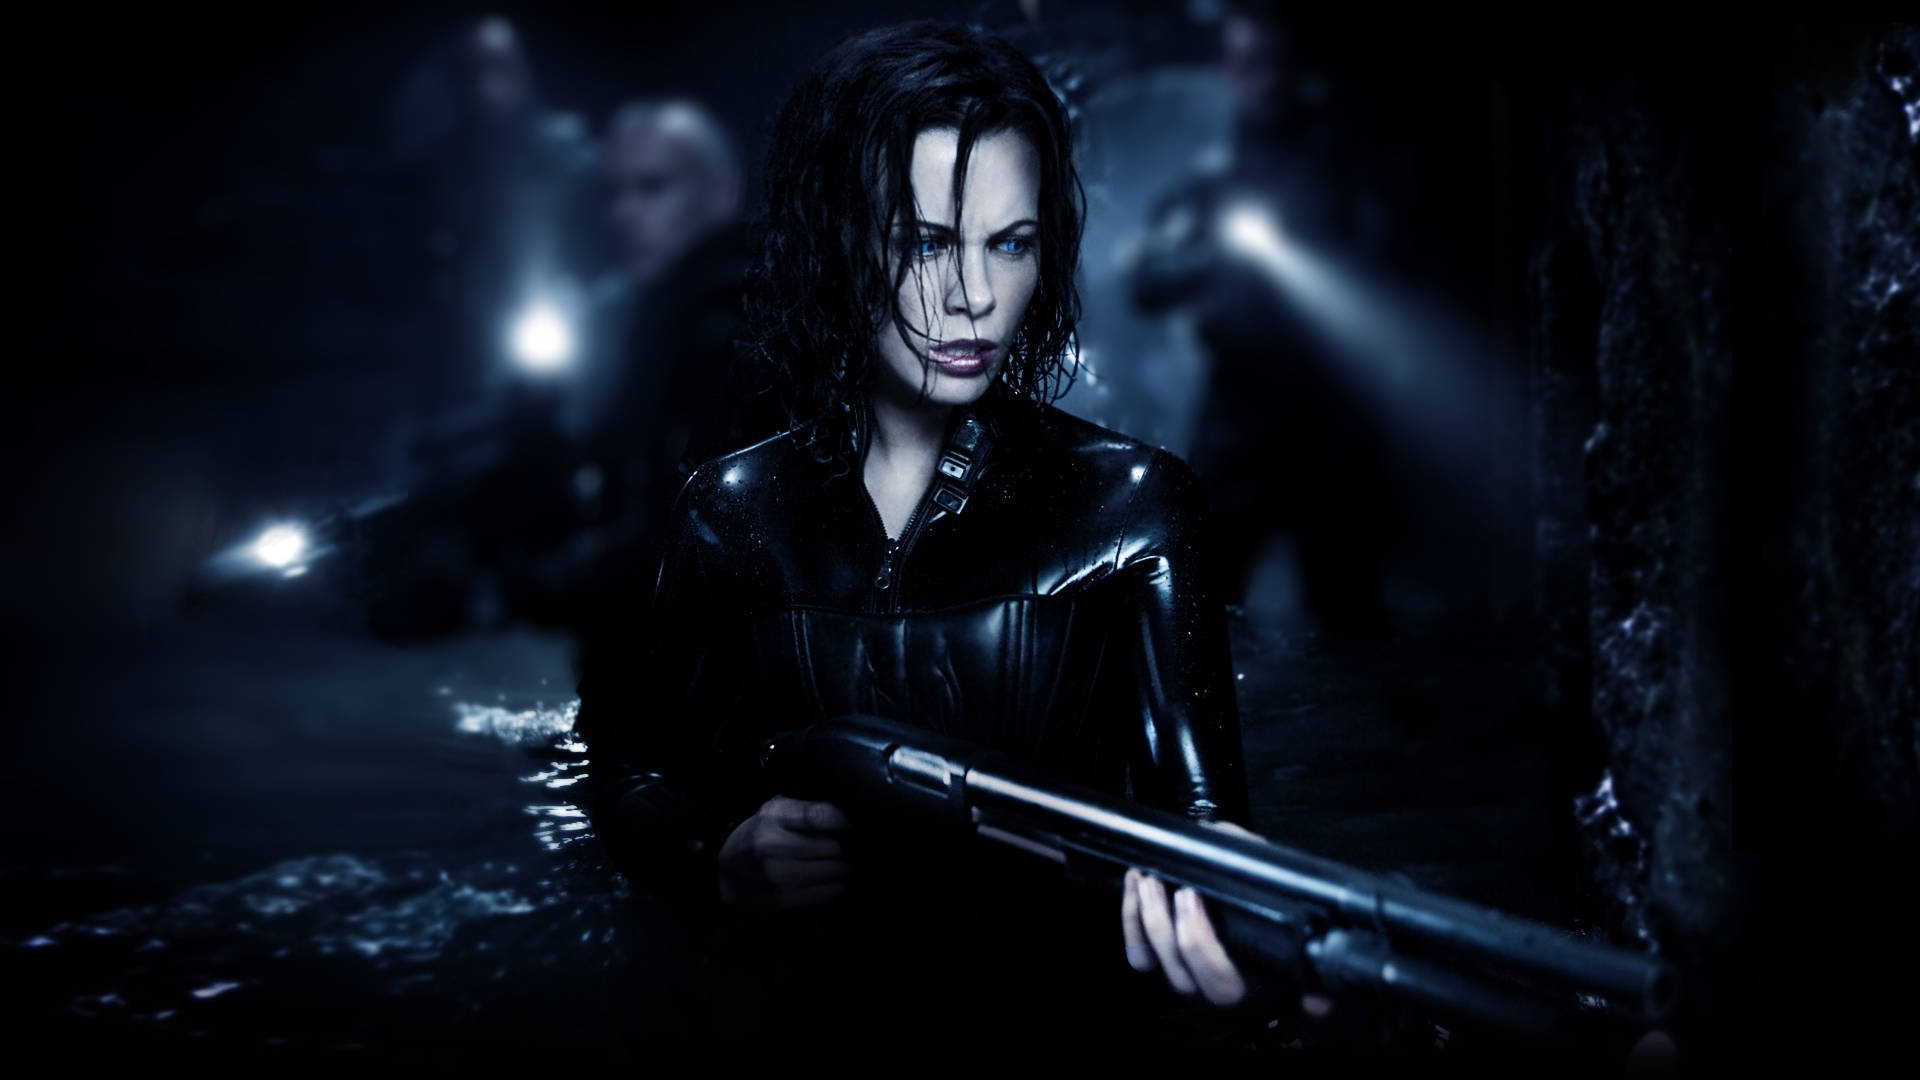 Actress Kate Beckinsale as the unrelenting vampire Selene in fantasy action film “Underworld”. Wallpaper